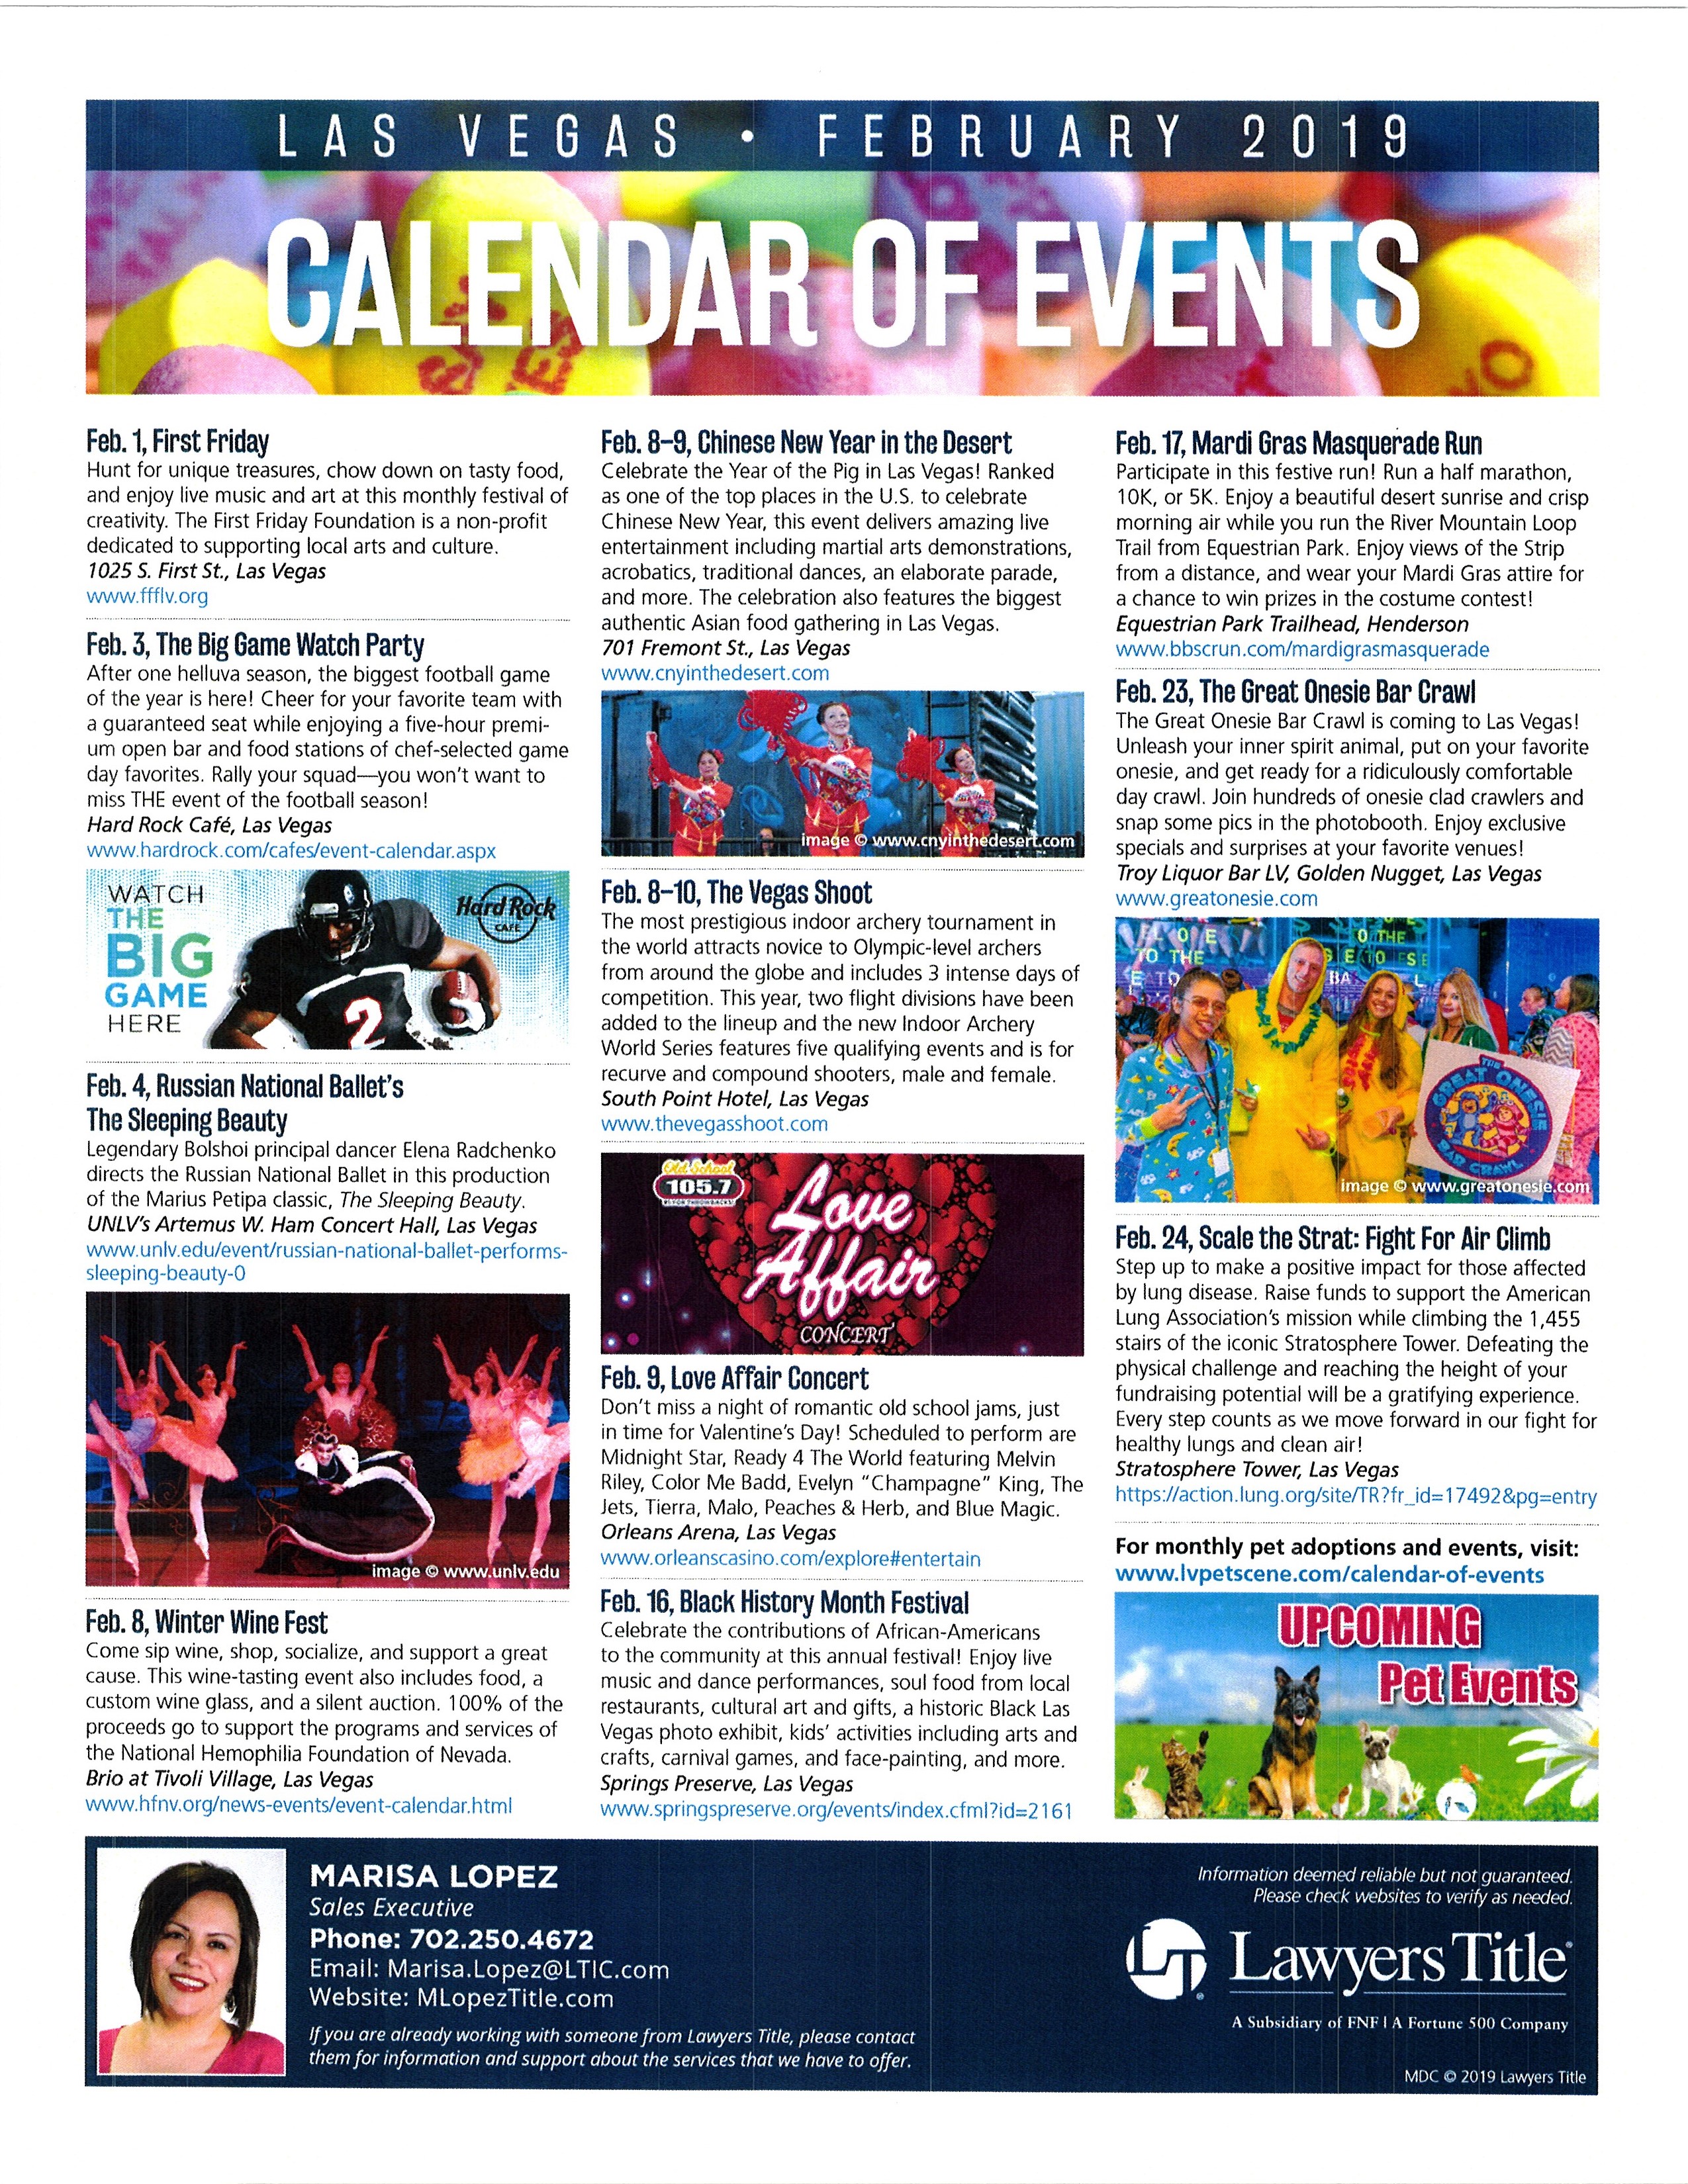 Las Vegas Events Calendar {Las Vegas Events}